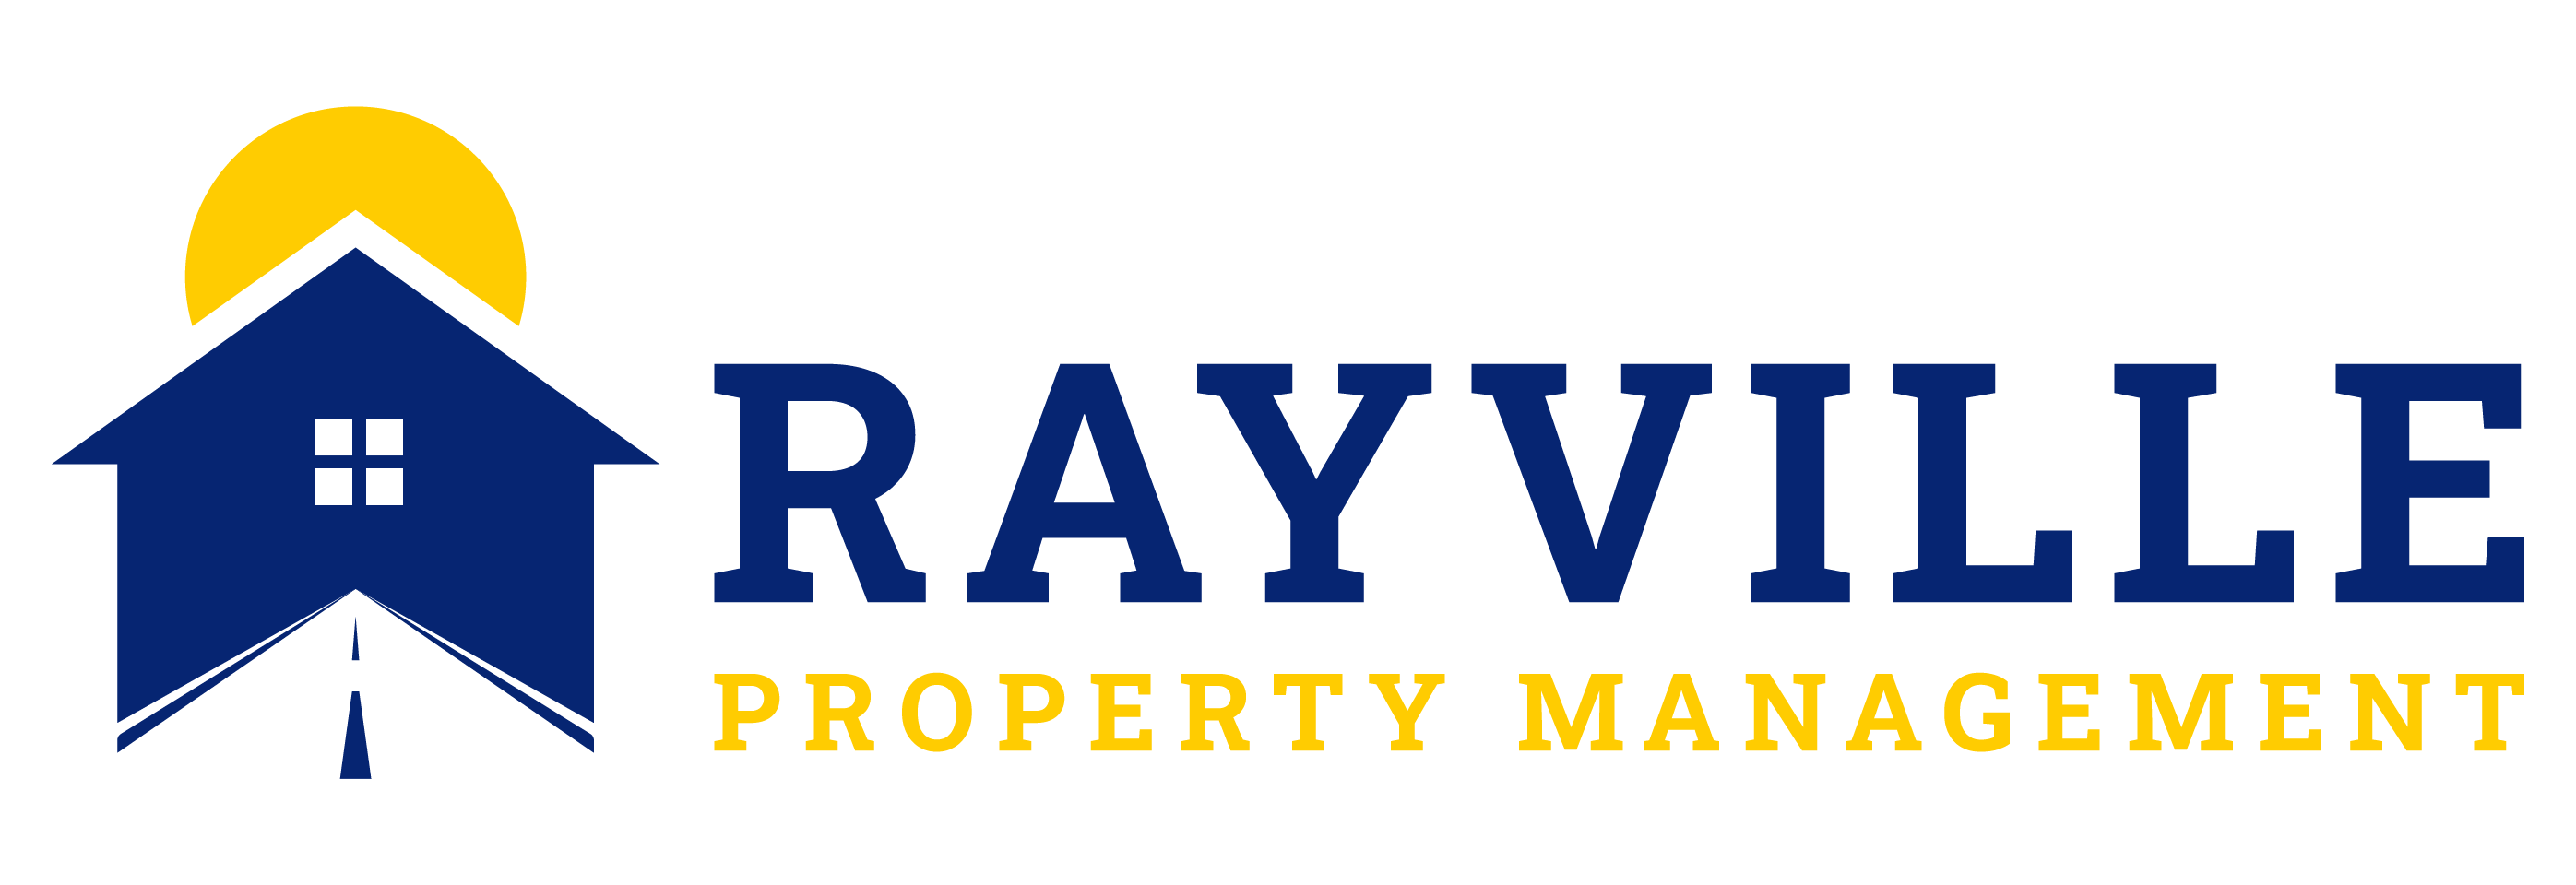 Rayville Property Management